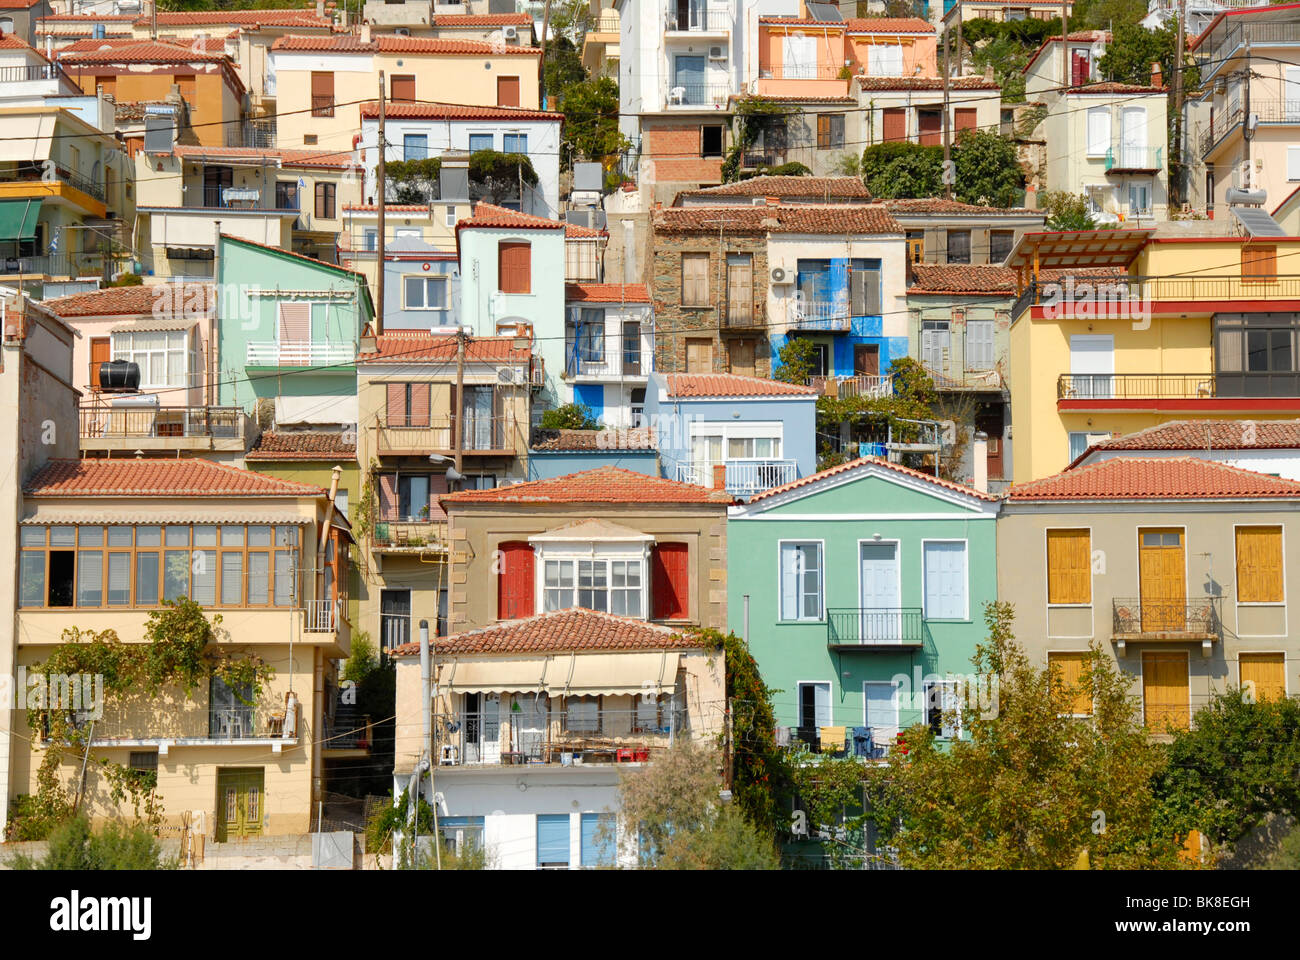 Town built on a hill, many-coloured houses, Plomari, Lesbos island, Aegean Sea, Greece, Europe Stock Photo